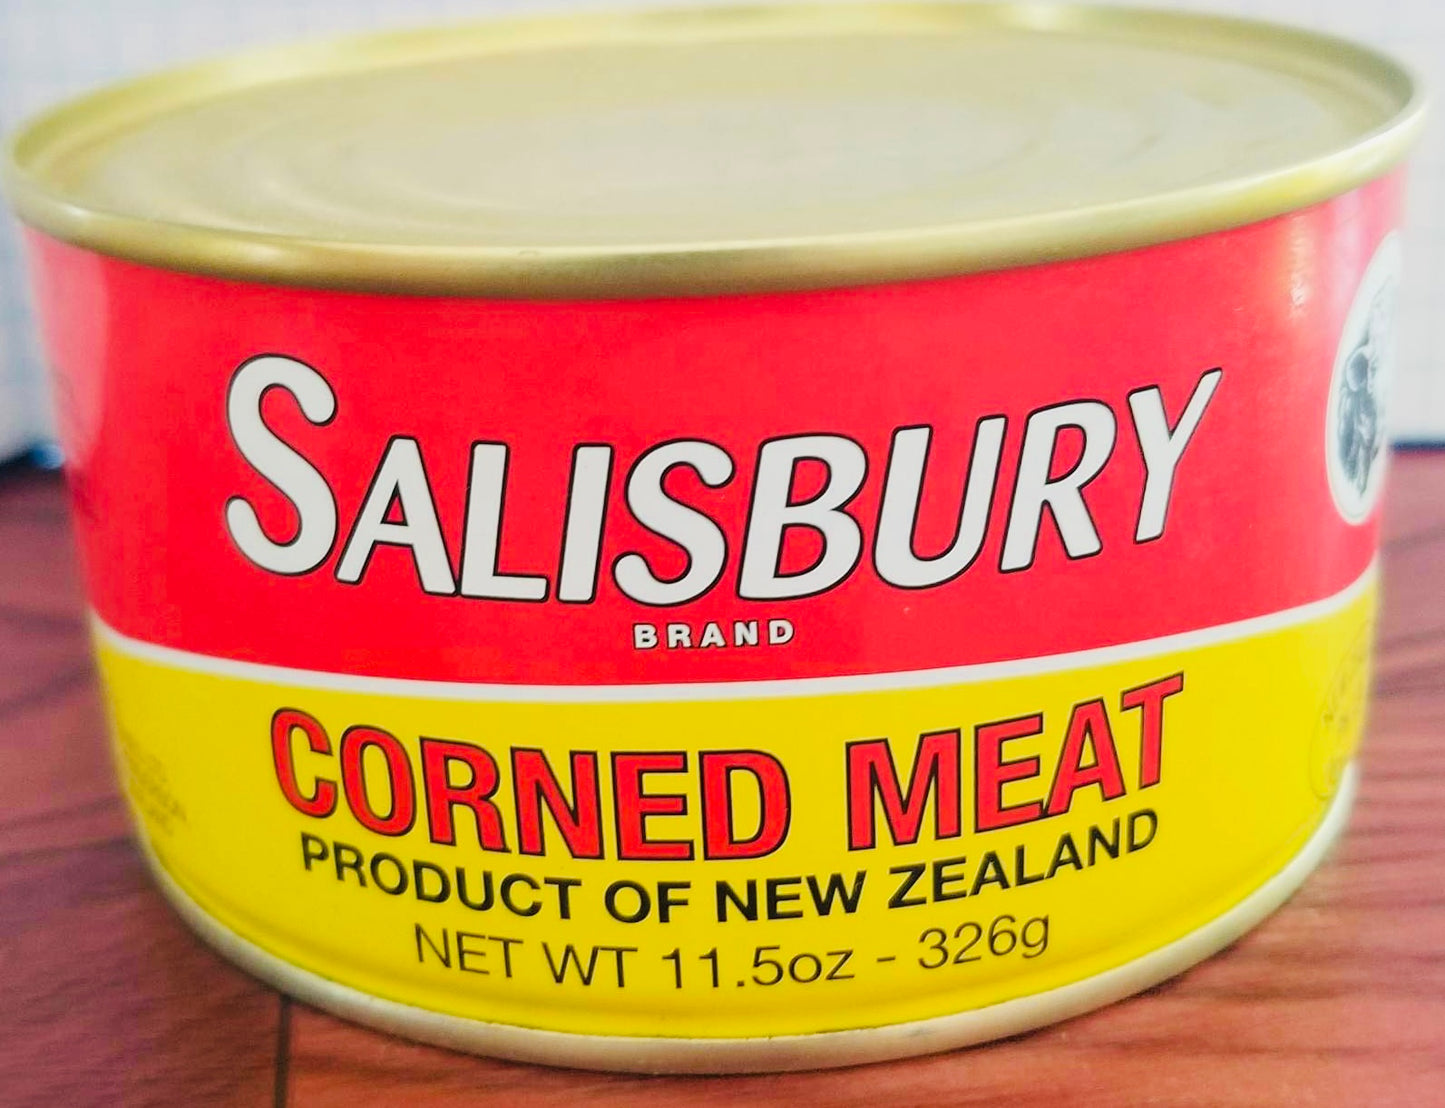 Salisbury CORNED MEAT 326g